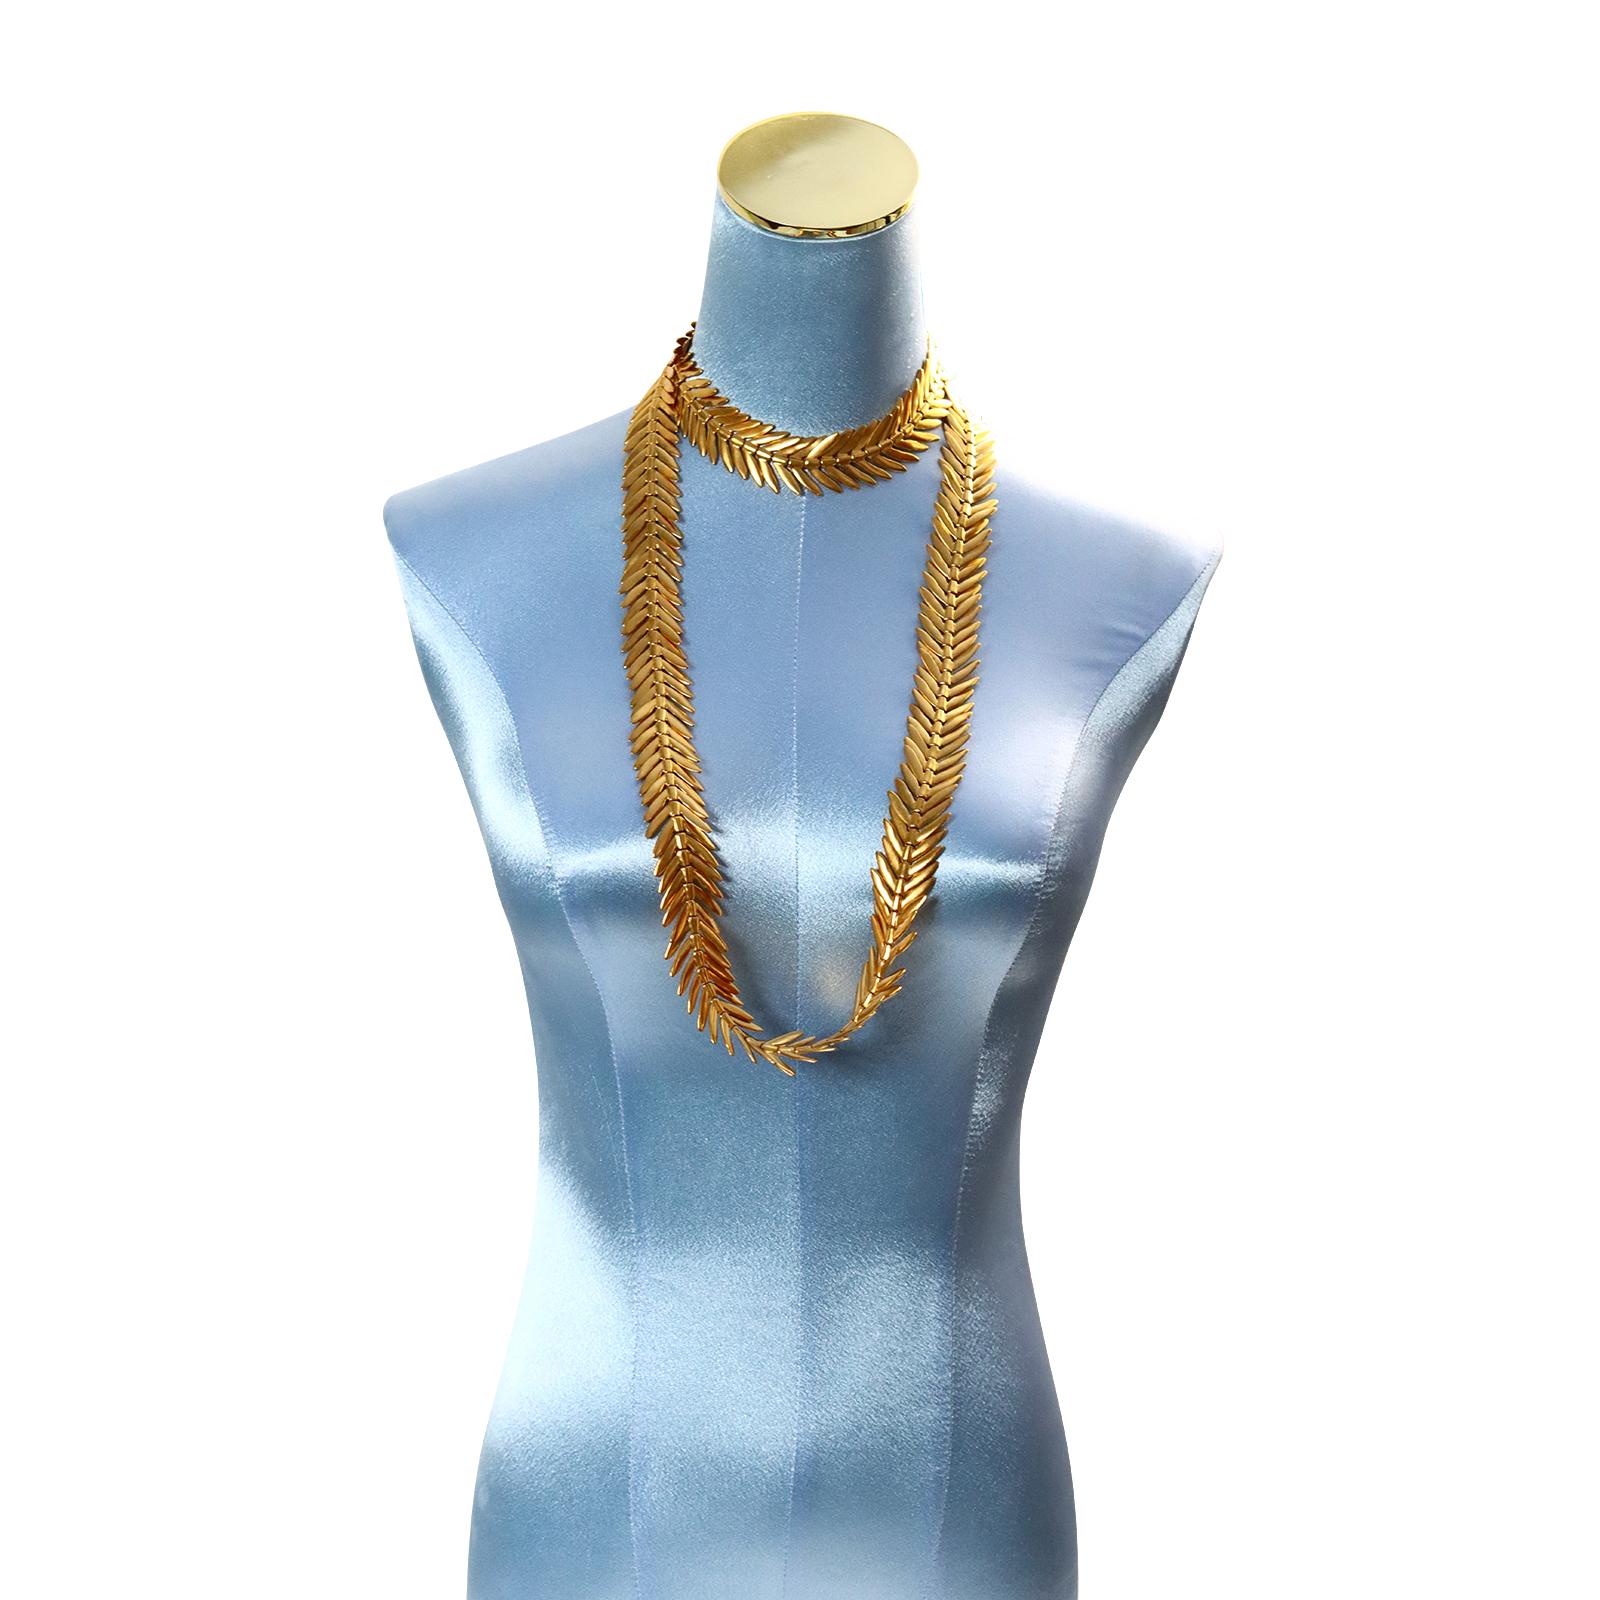 Artist Vintage Anne Klein Gold Tone Long Necklace Circa 1980s